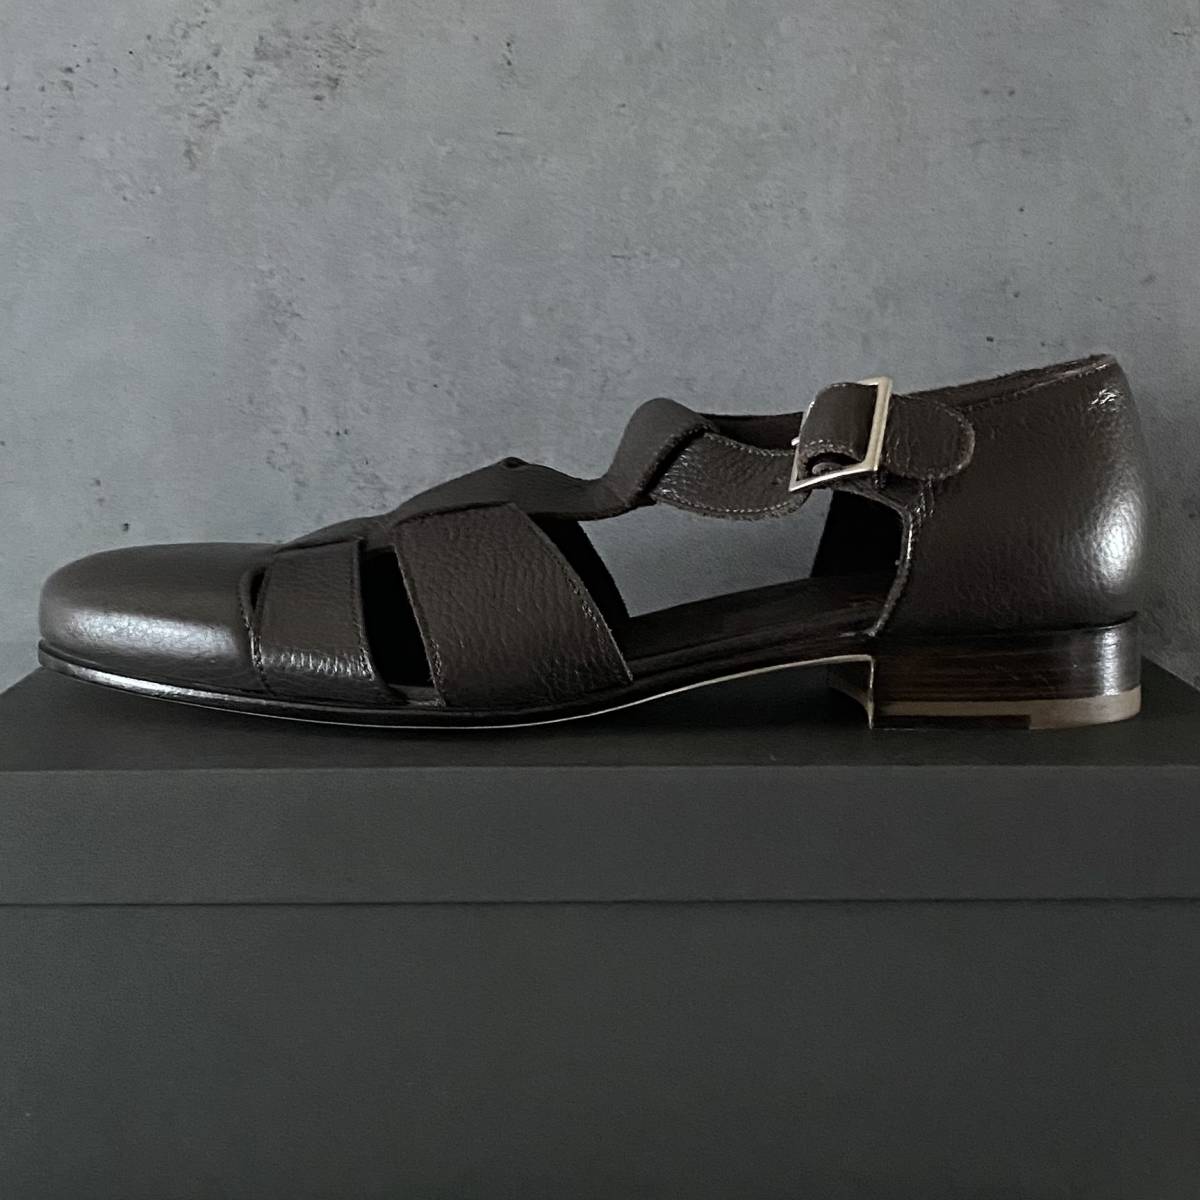 FERRANTE（フェランテ) グルカサンダル シュリンクレザー ブラウン 革靴 シューズ イタリア製